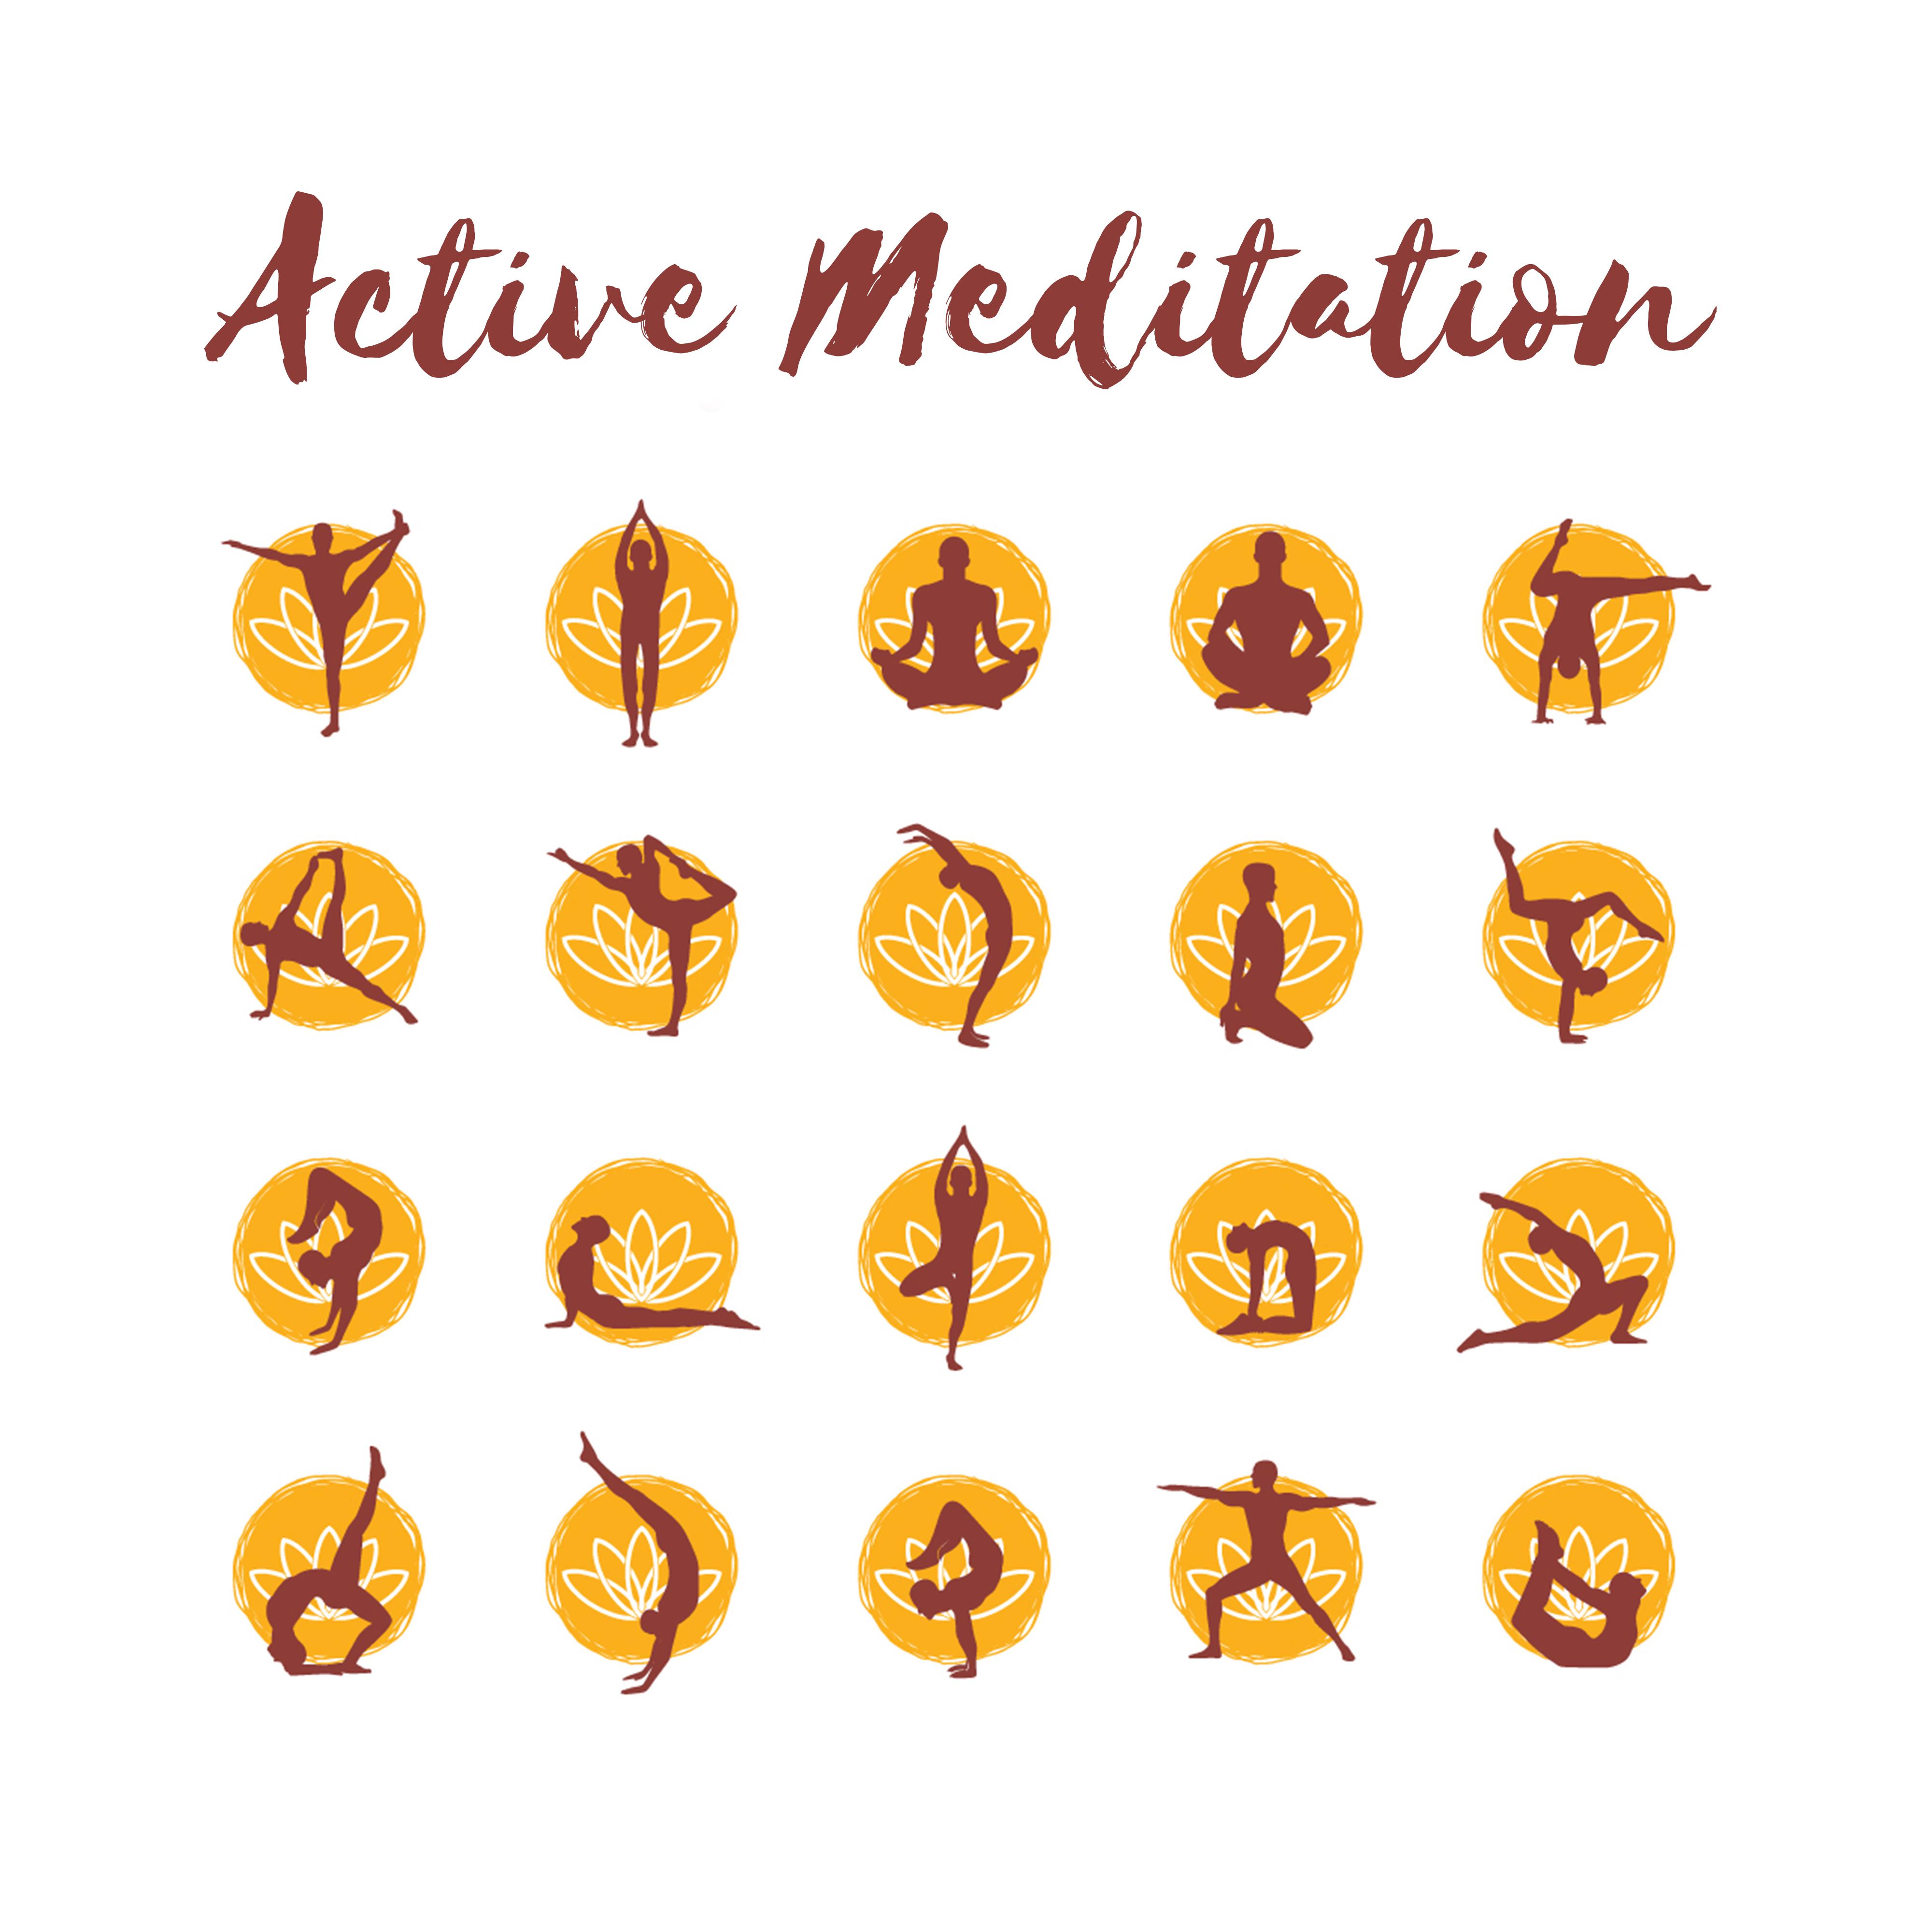 Active Meditation